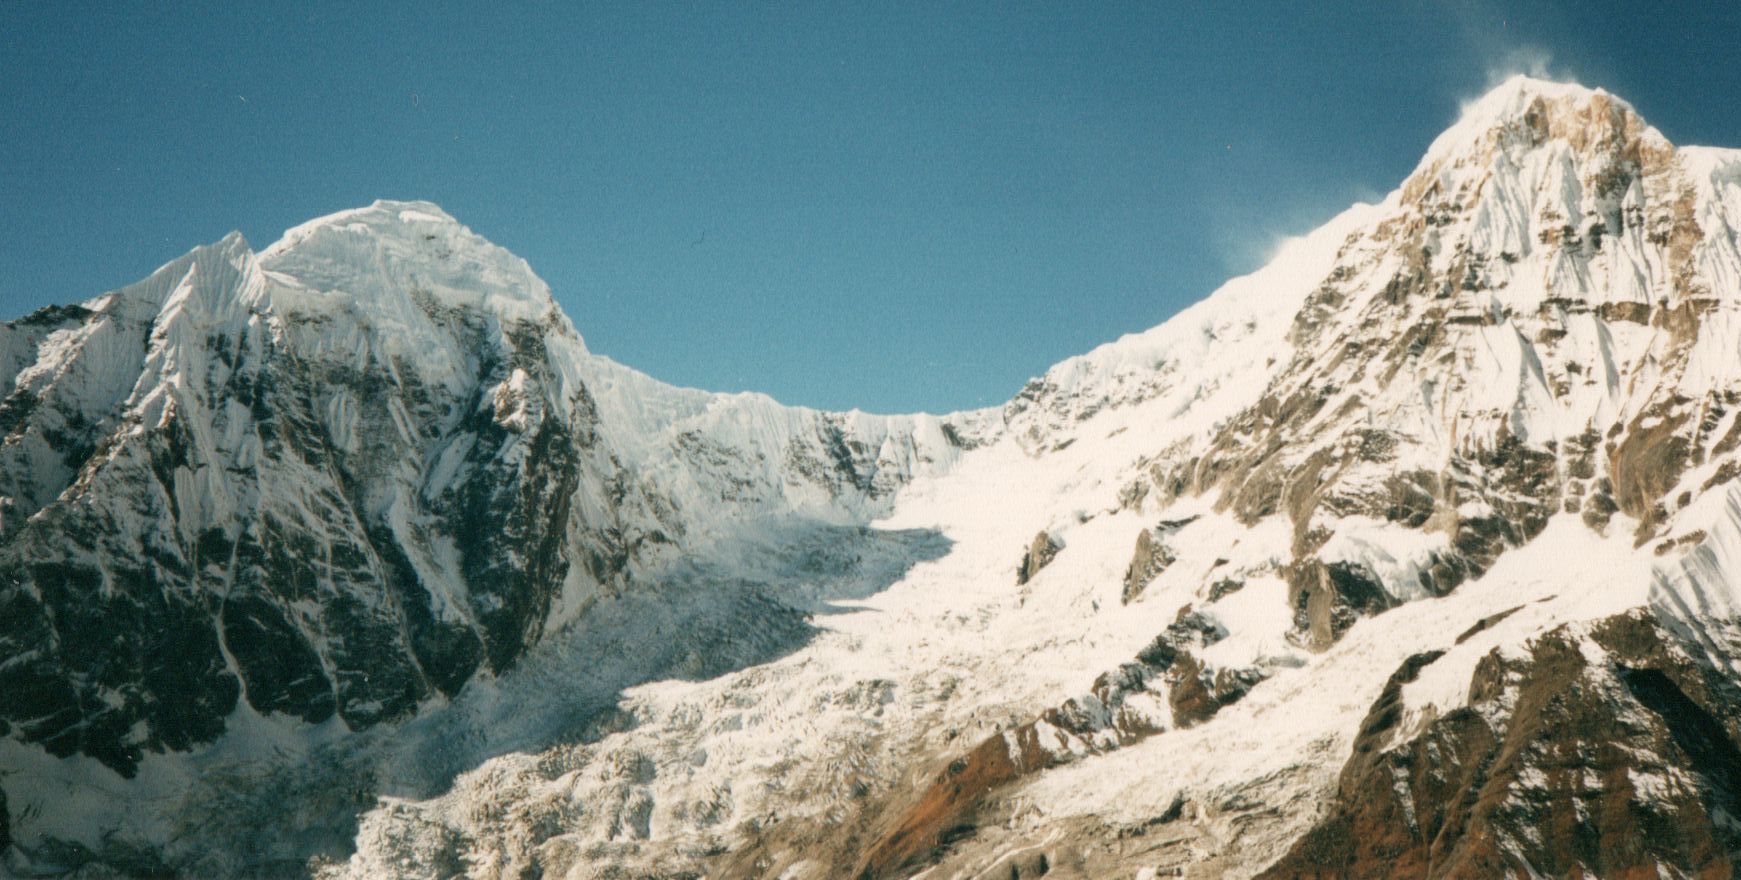 Hiunchuli and Annapurna South from Rakshi Peak